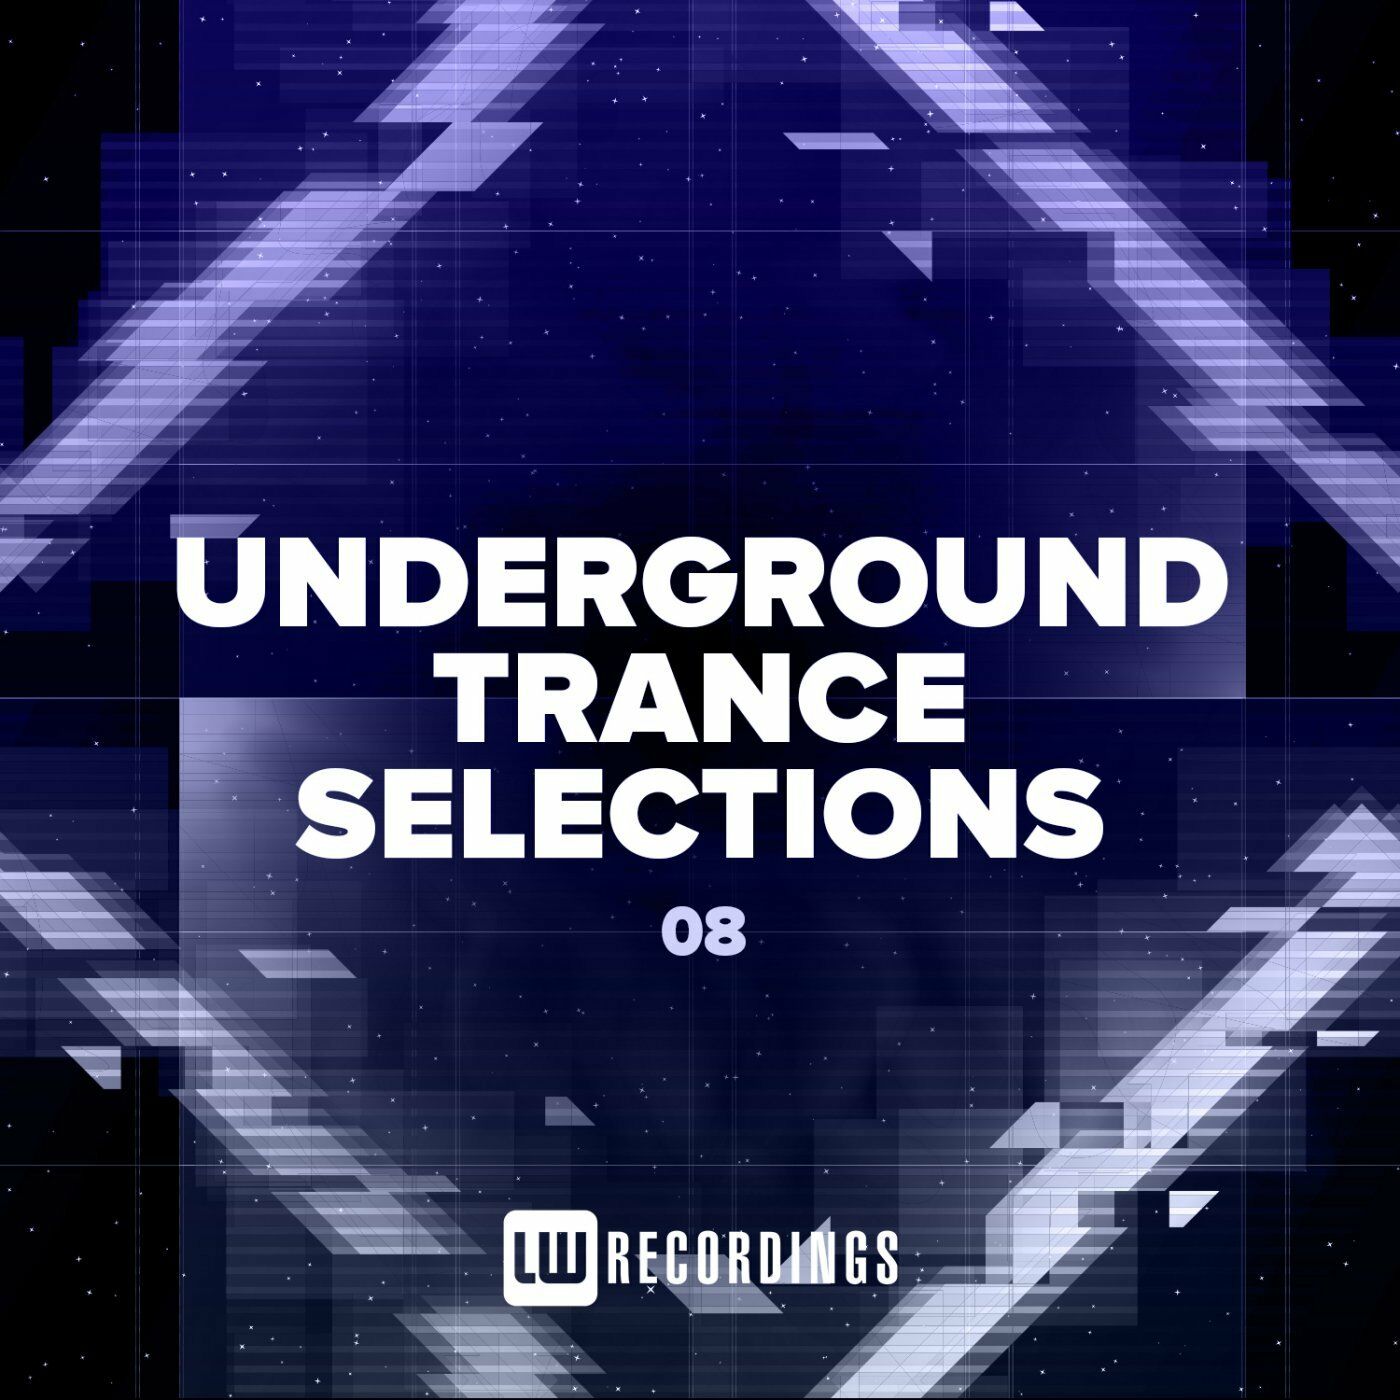 Underground Trance Selections Vol. 08 MP3 320Kbit